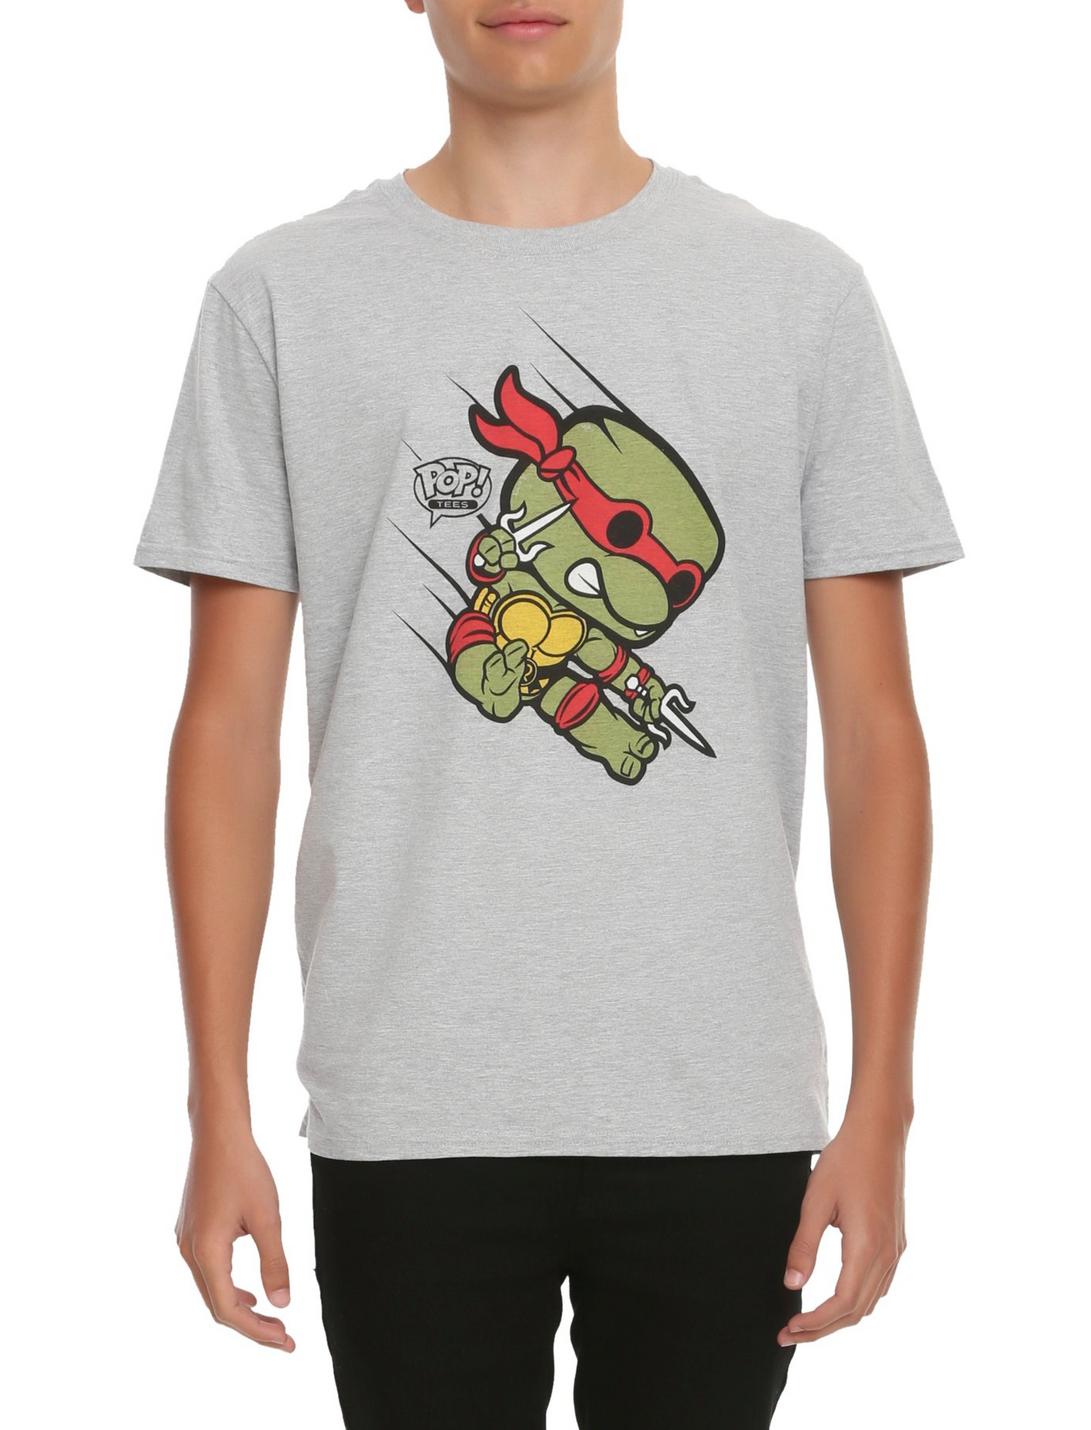 Funko Teenage Mutant Ninja Turtles Pop! Raphael T-Shirt Hot Topic Exclusive, , hi-res